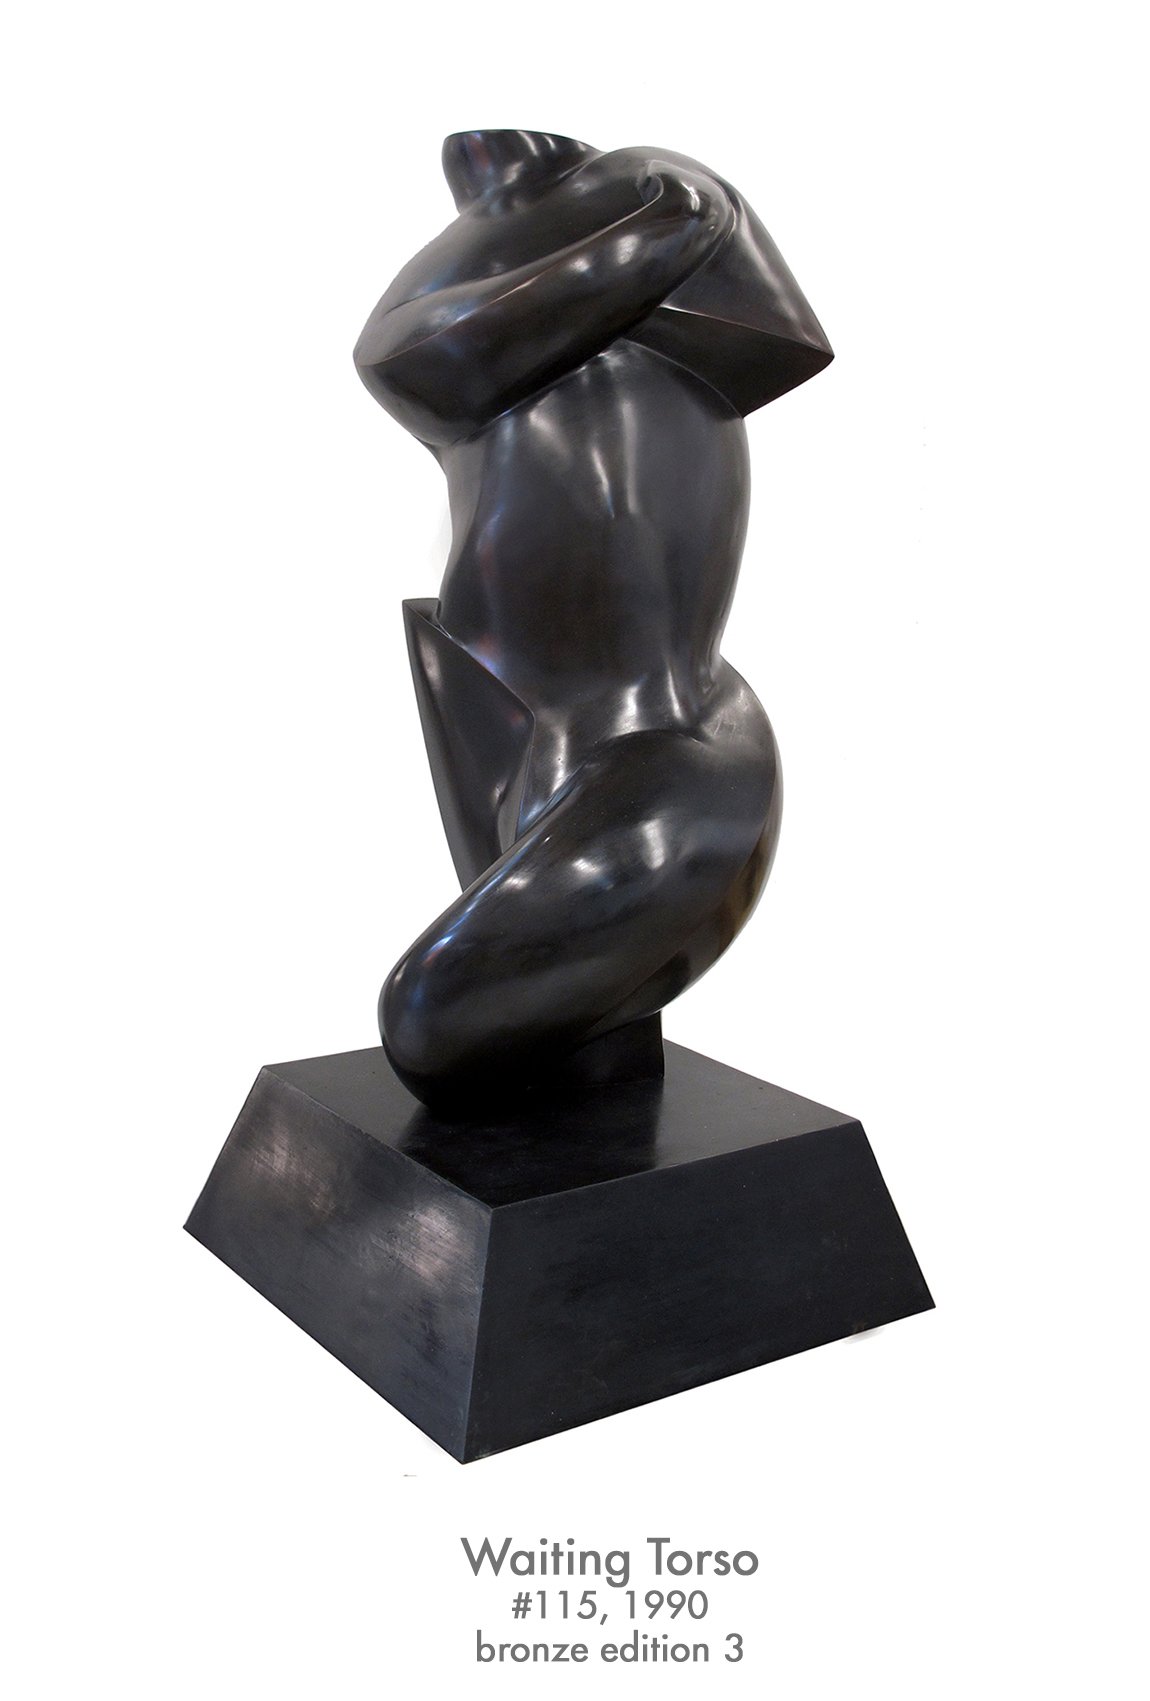 Waiting Torso, 1990, bronze, #115